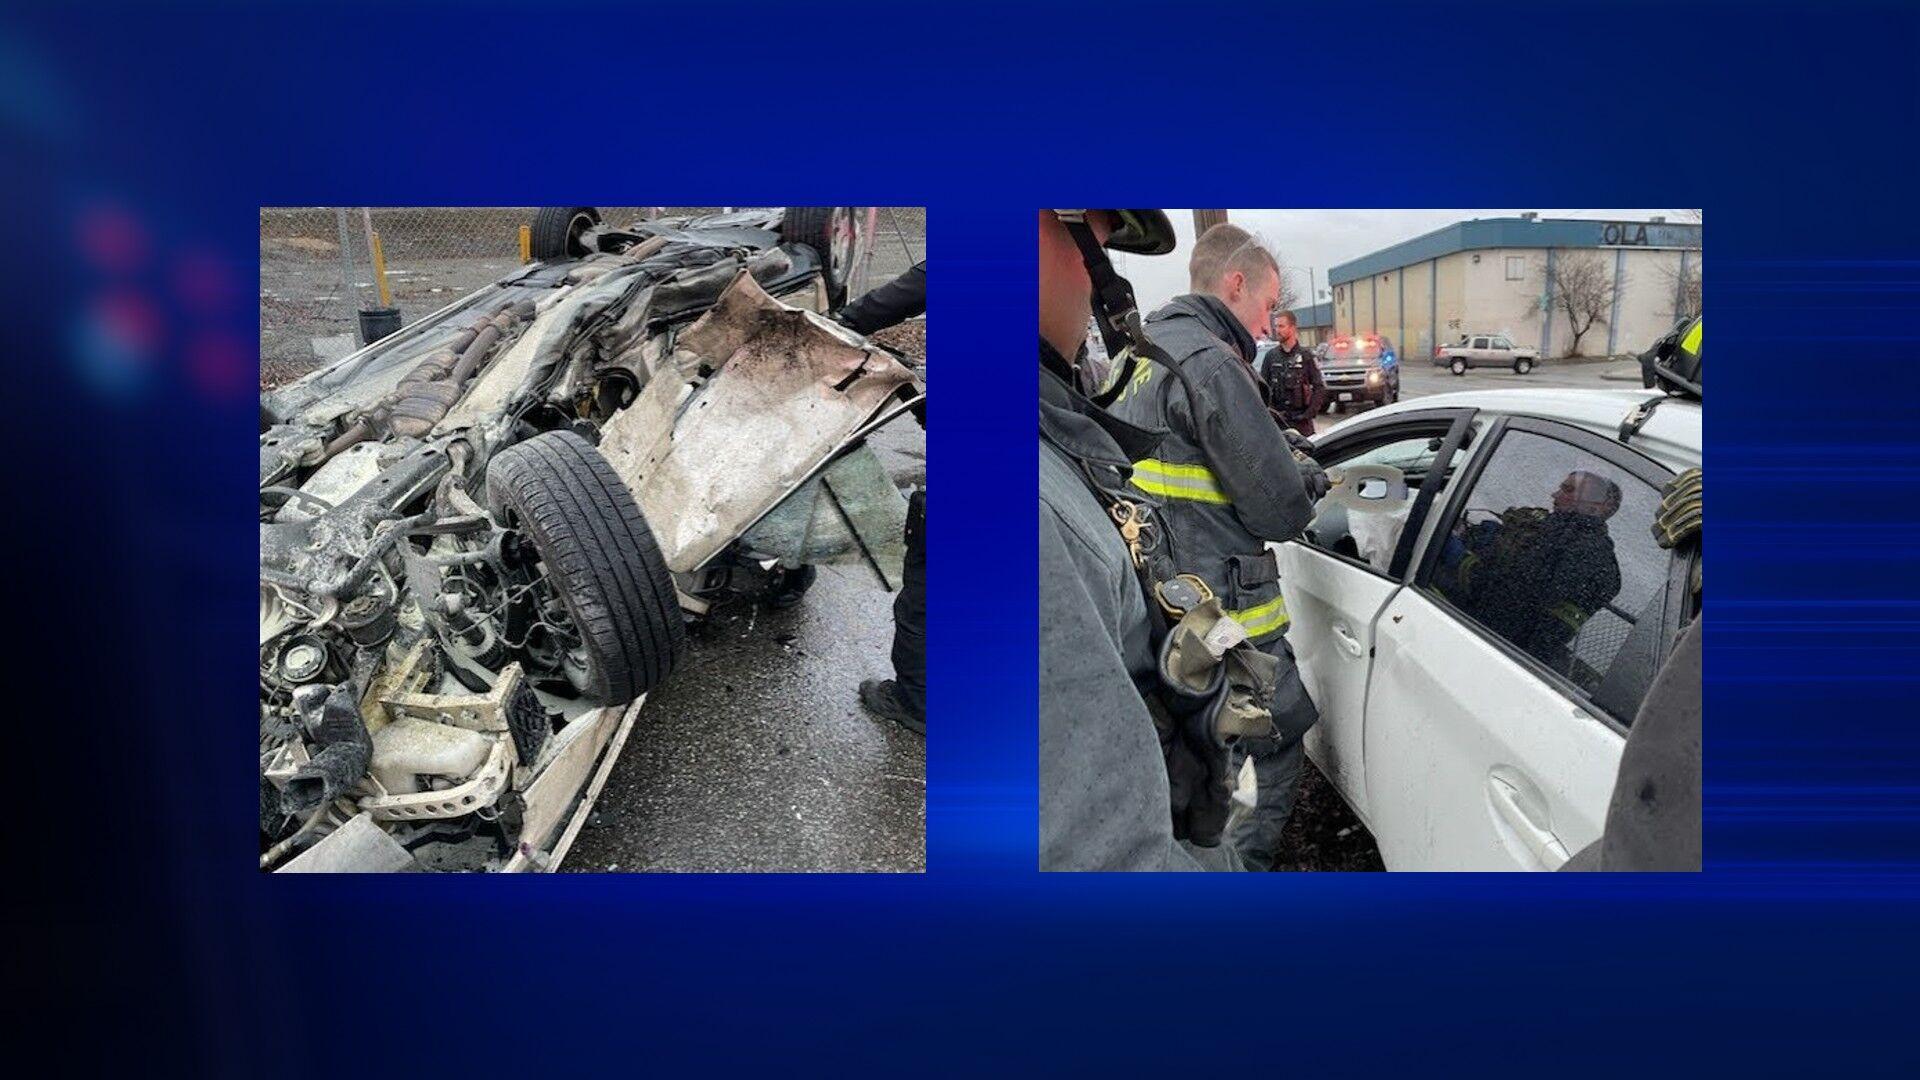 Spokane Fire Department offers update on violent car crash